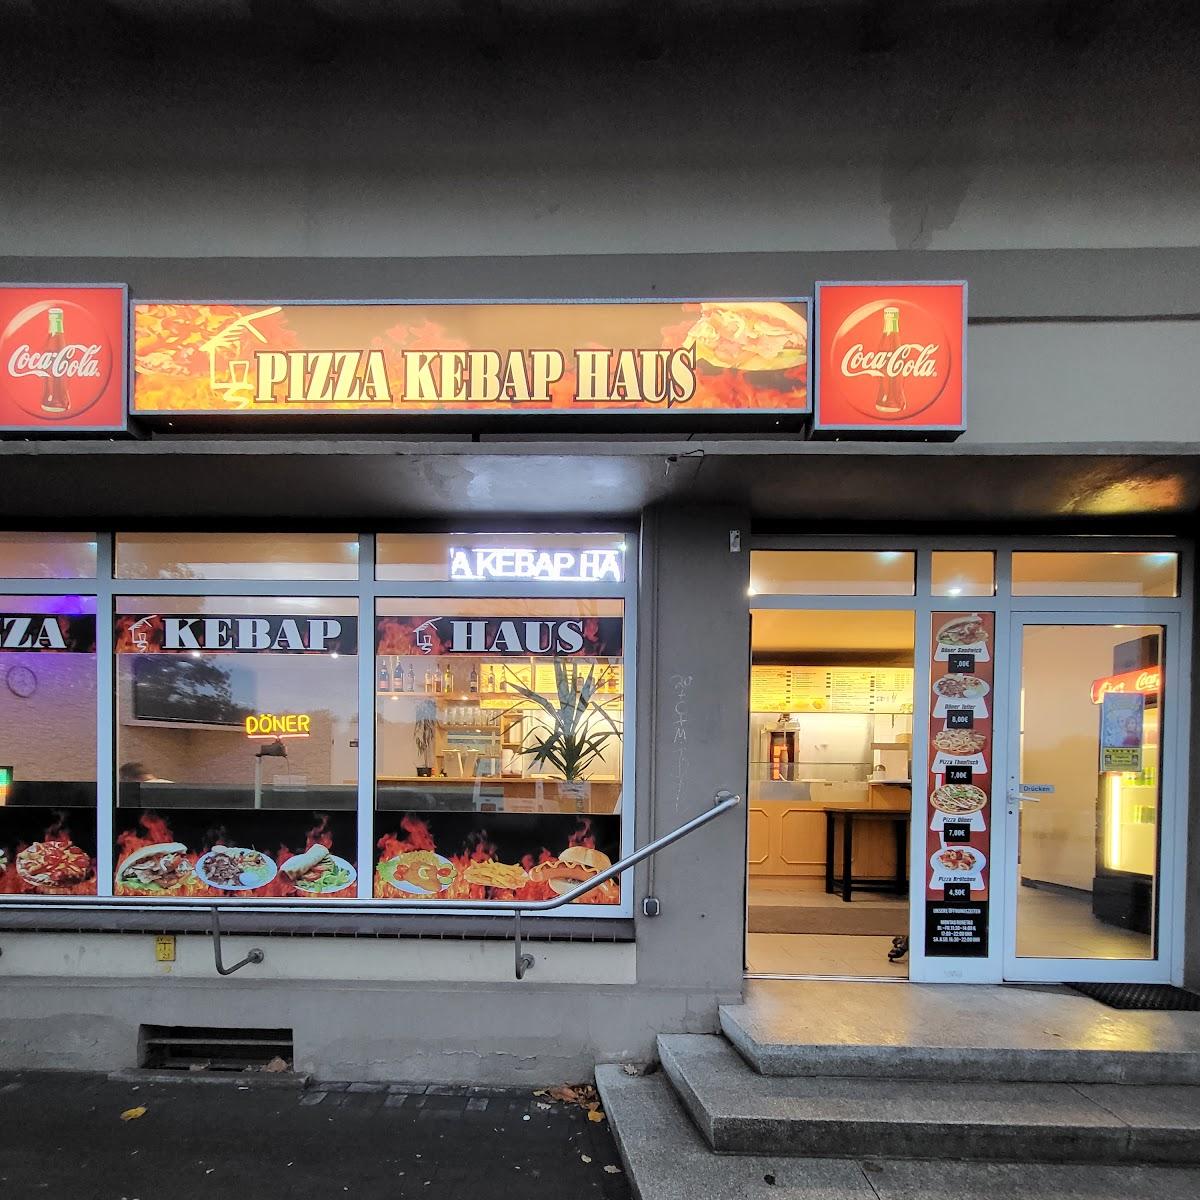 Restaurant "Pizza Kebap Haus" in Lotte